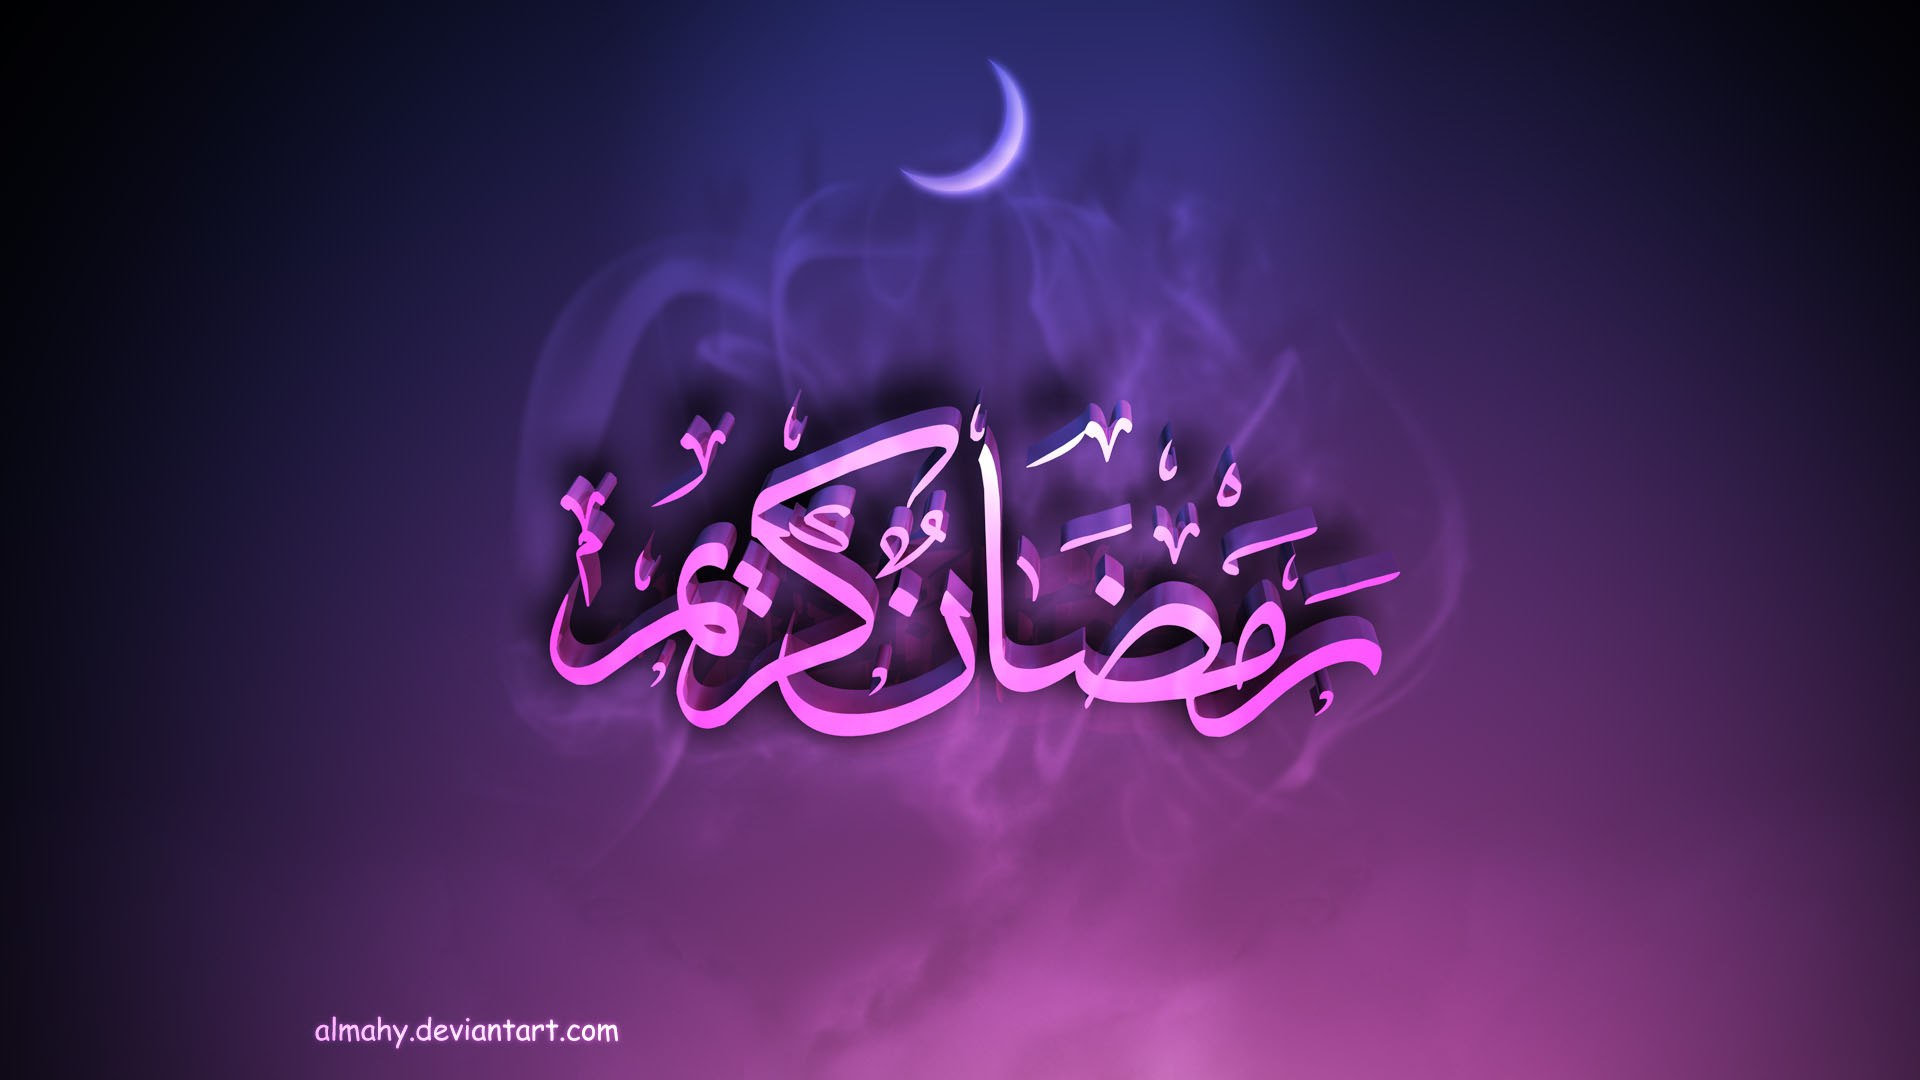 Best and beautiful ramadan wallpapers for your desktop